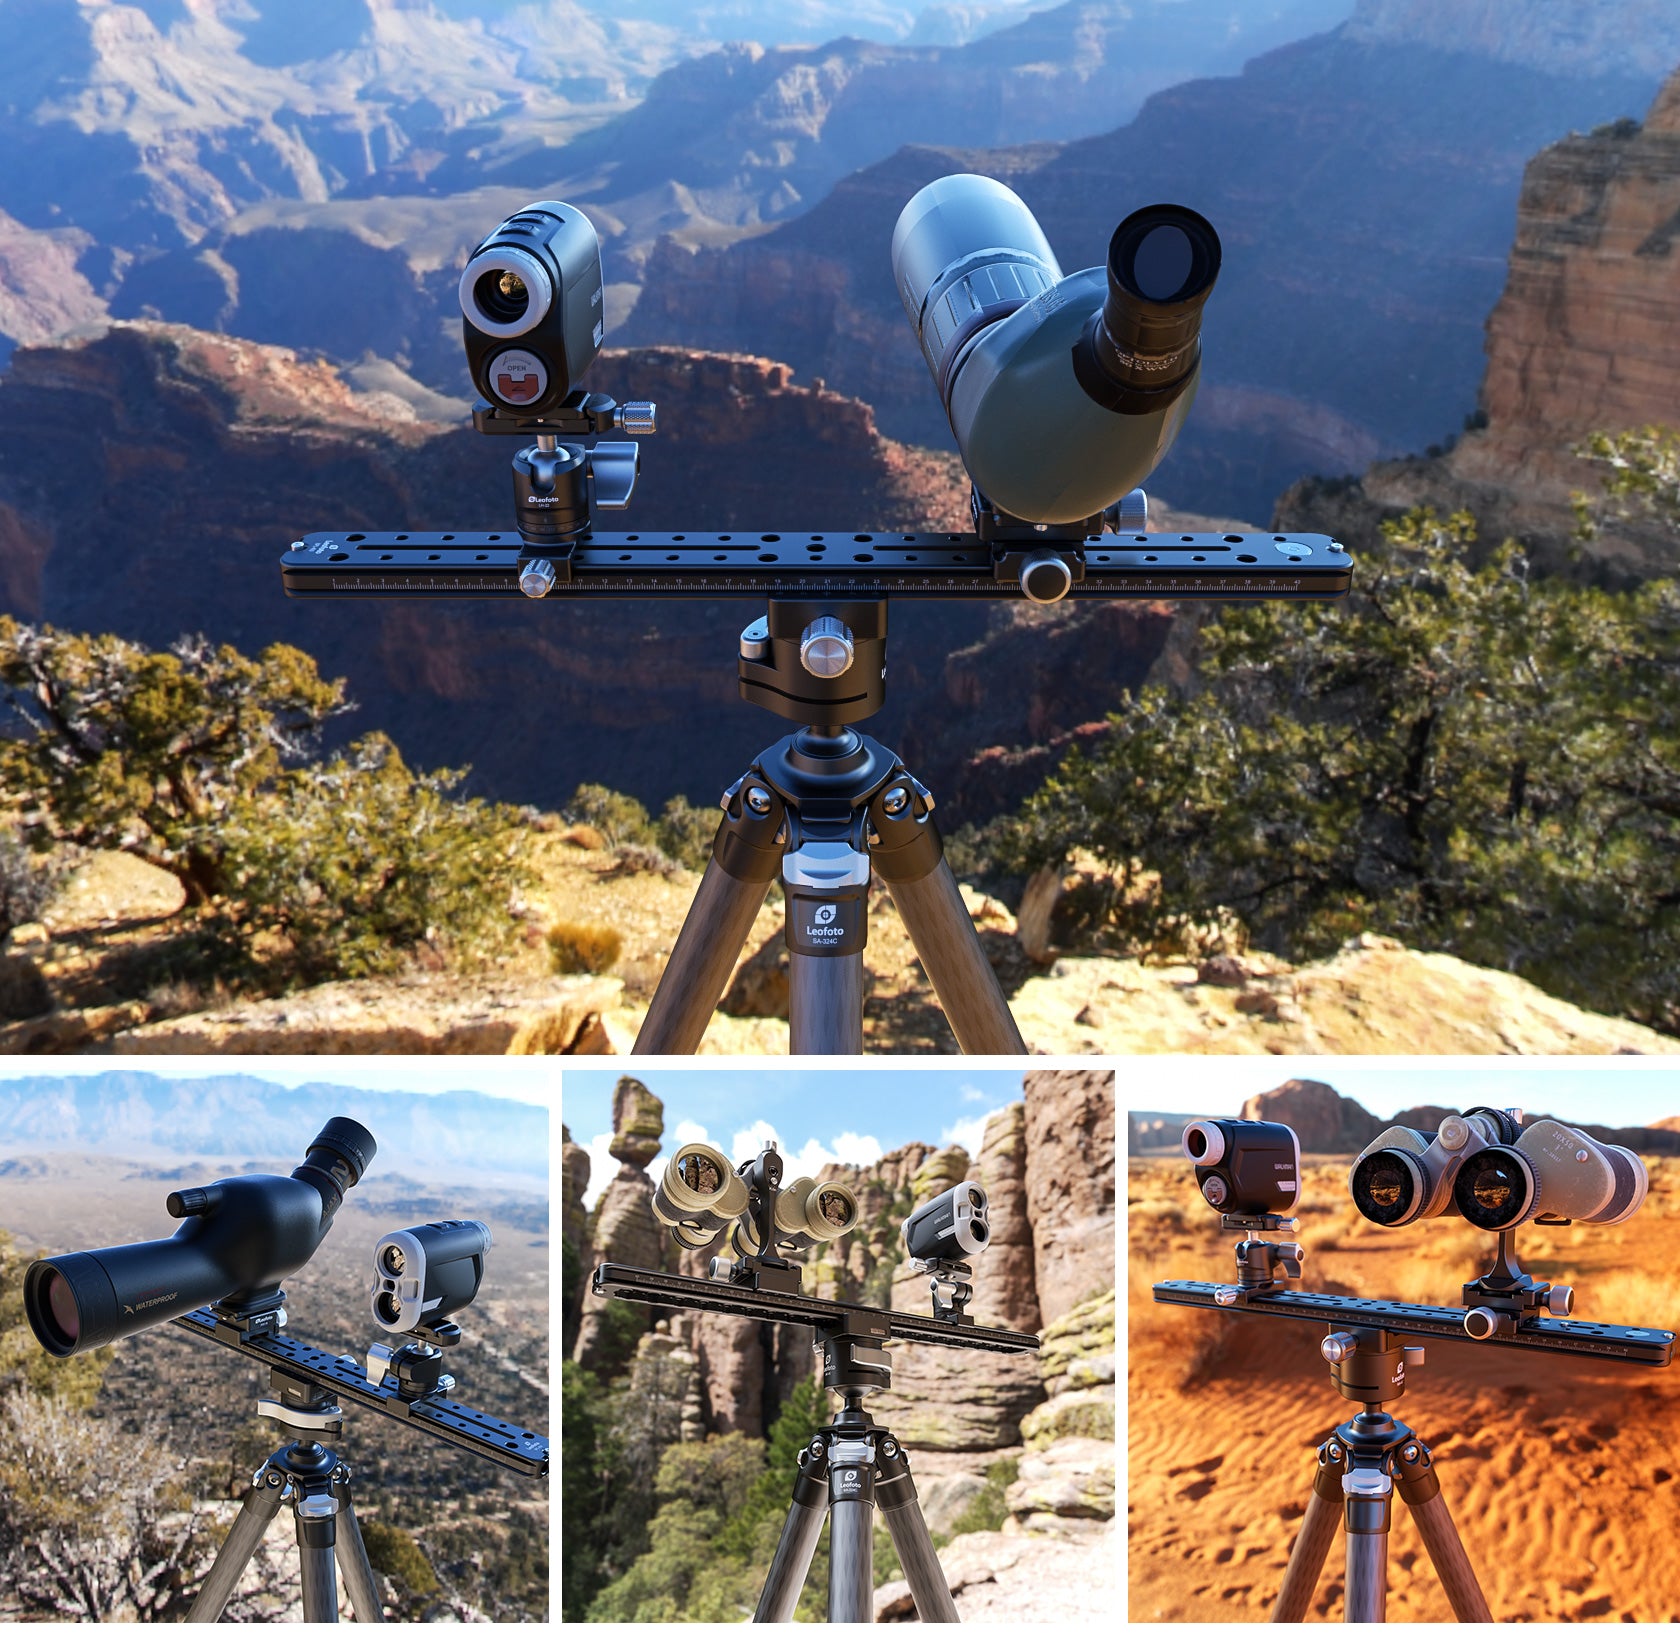 Leofoto FDM-04 Binocular Rangefinder Rail Kit | Length: 450mm